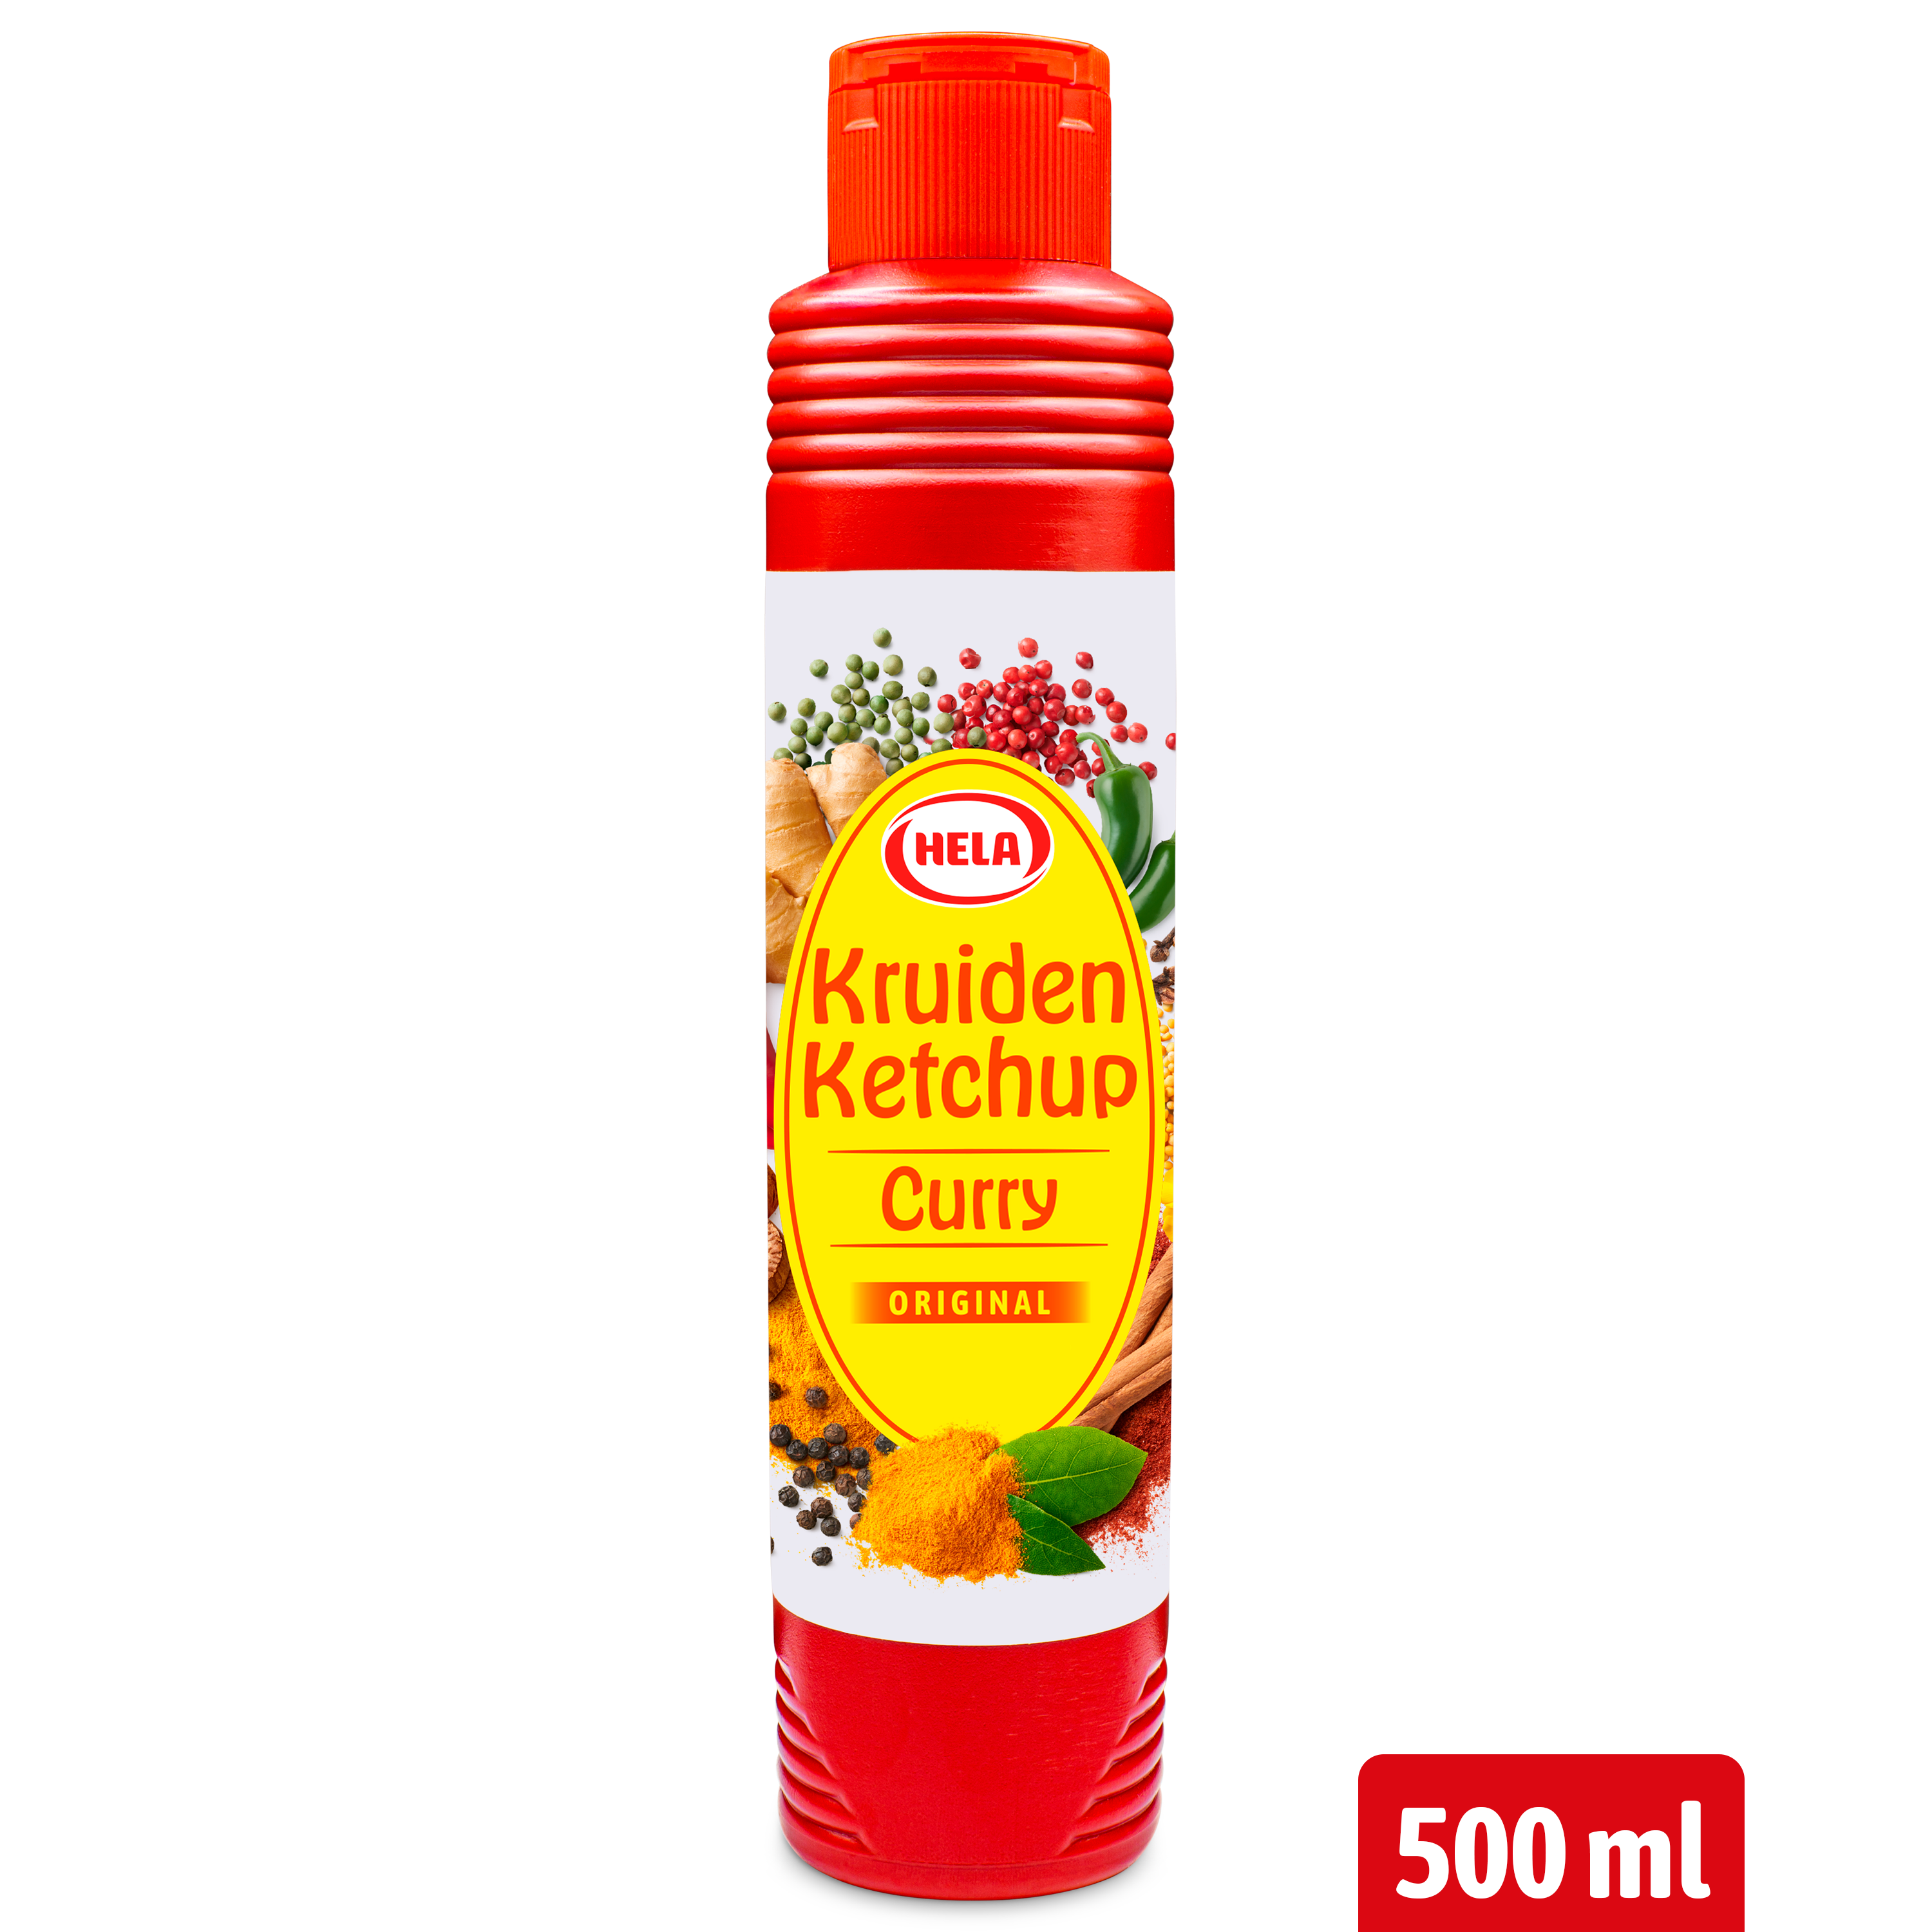 hela-kruiden-ketchup-curry-original-12×500-ml.png